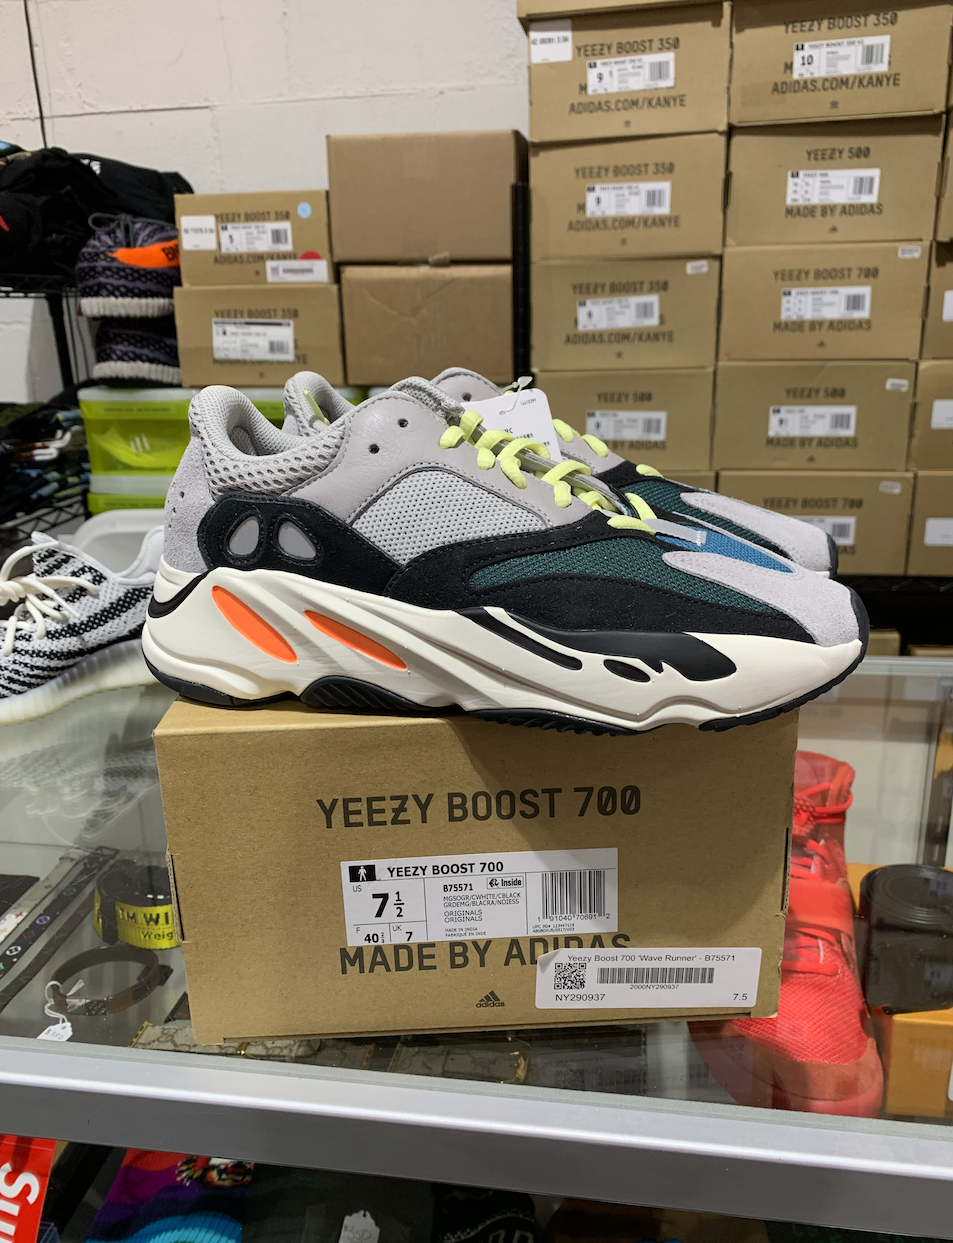 yeezy wave runner 700 retail price